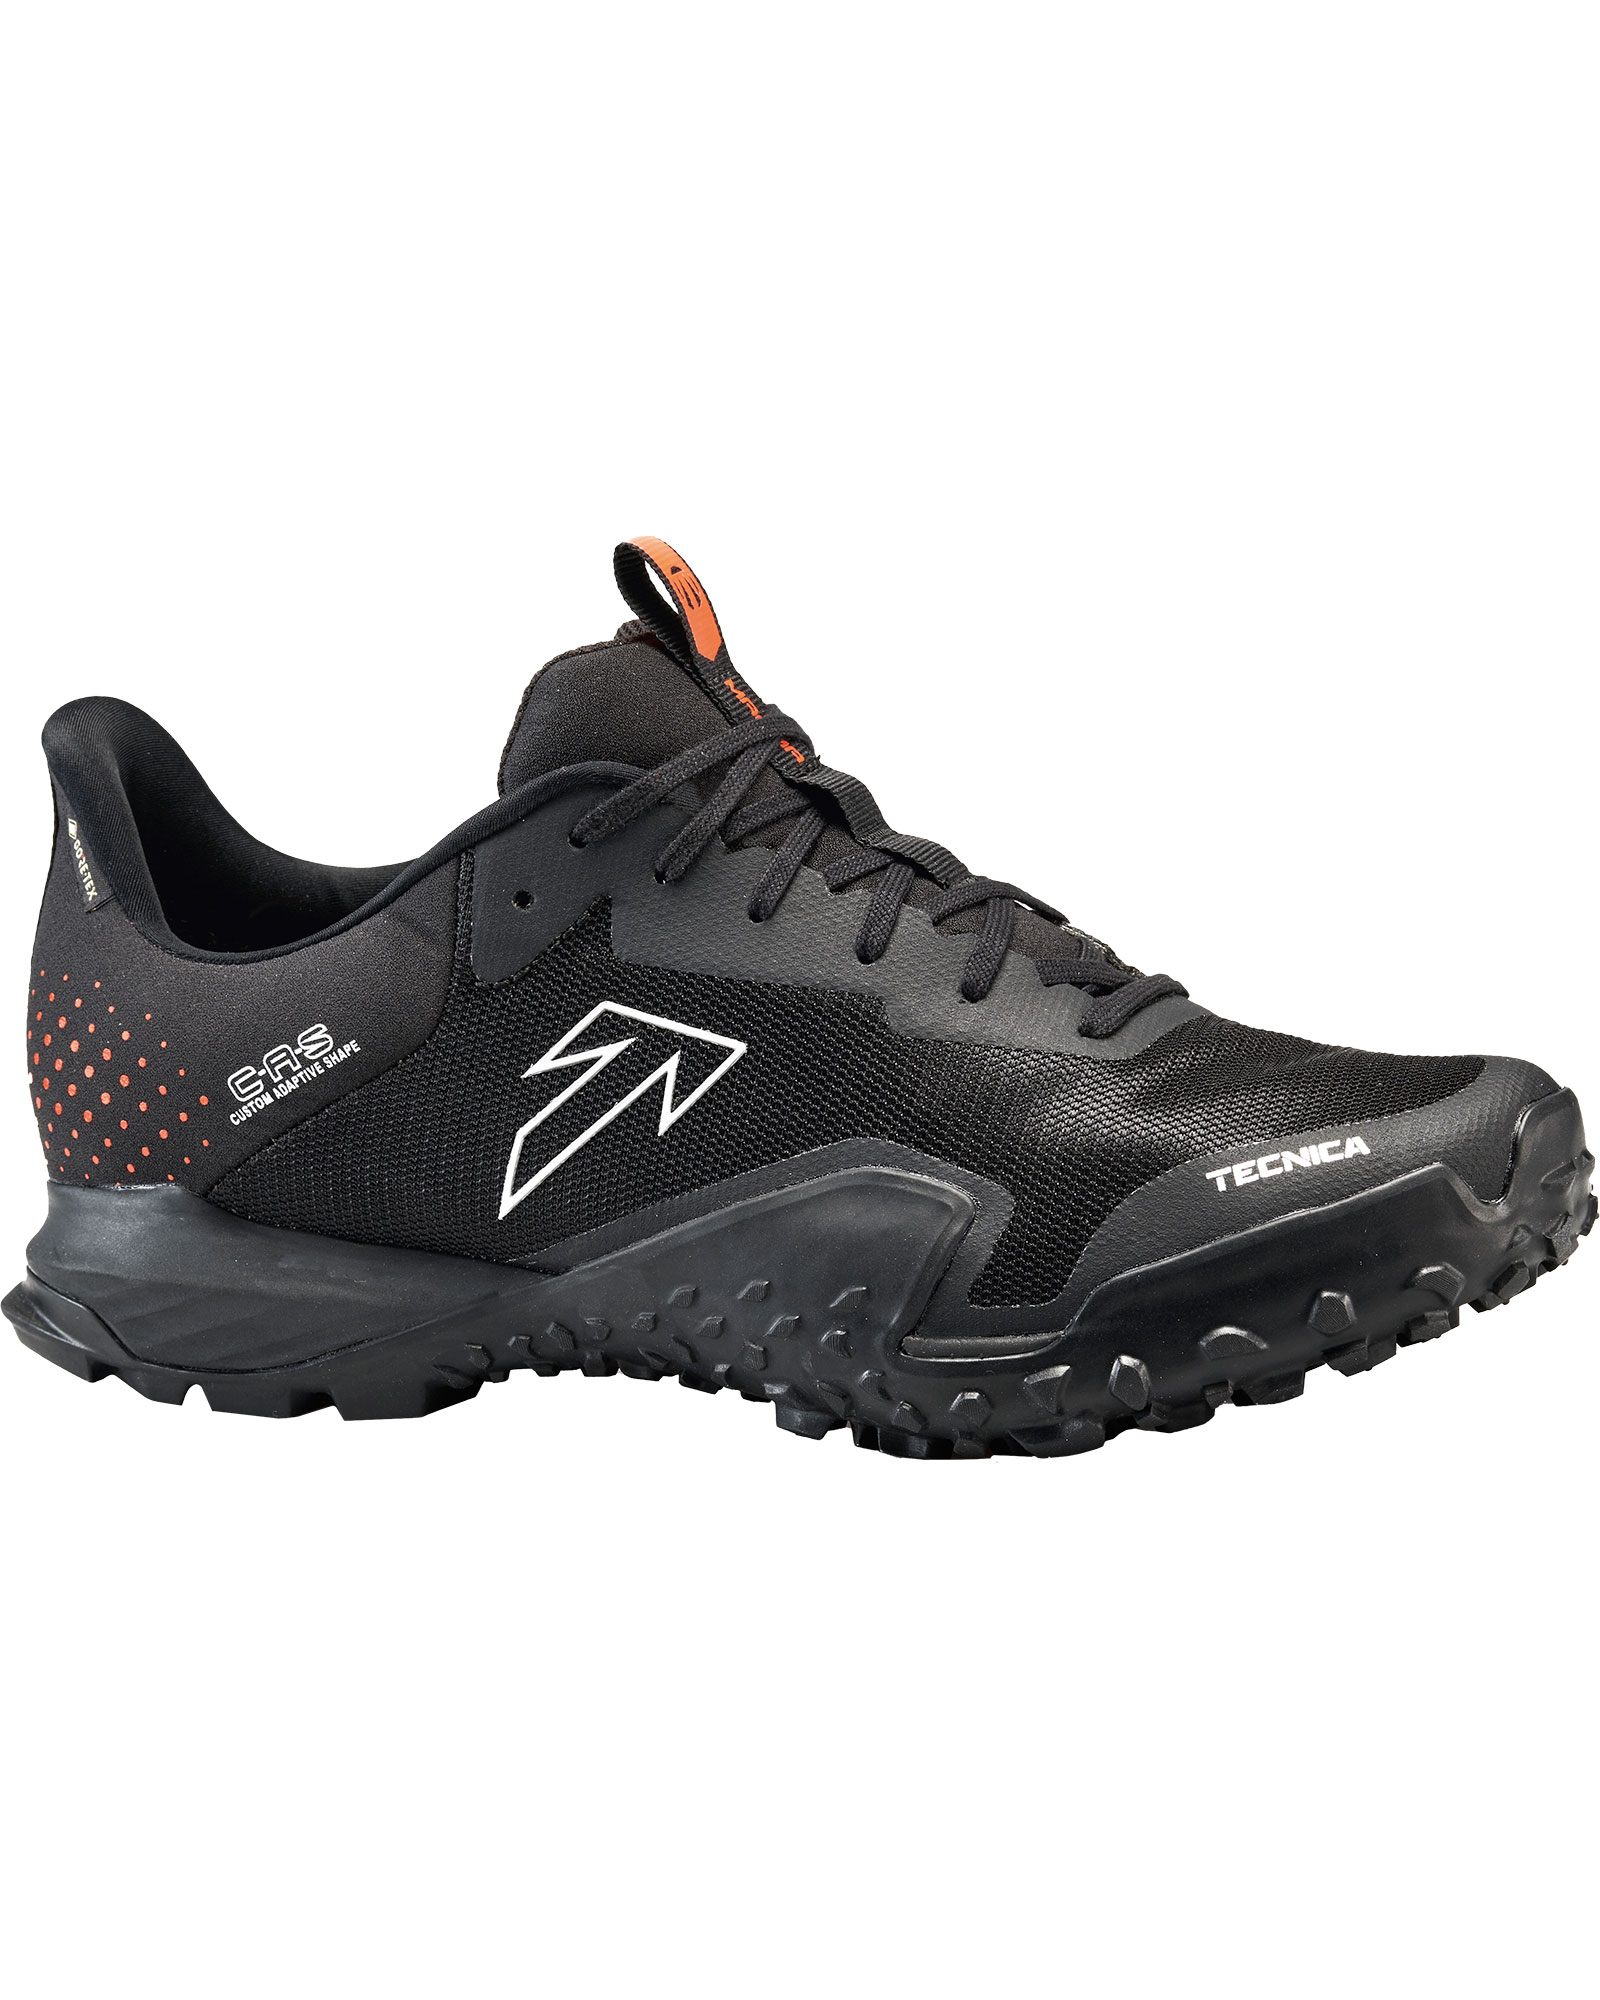 Tecnica Magma GORE TEX Men’s Shoes - Black/Dusty Lava UK 10.5